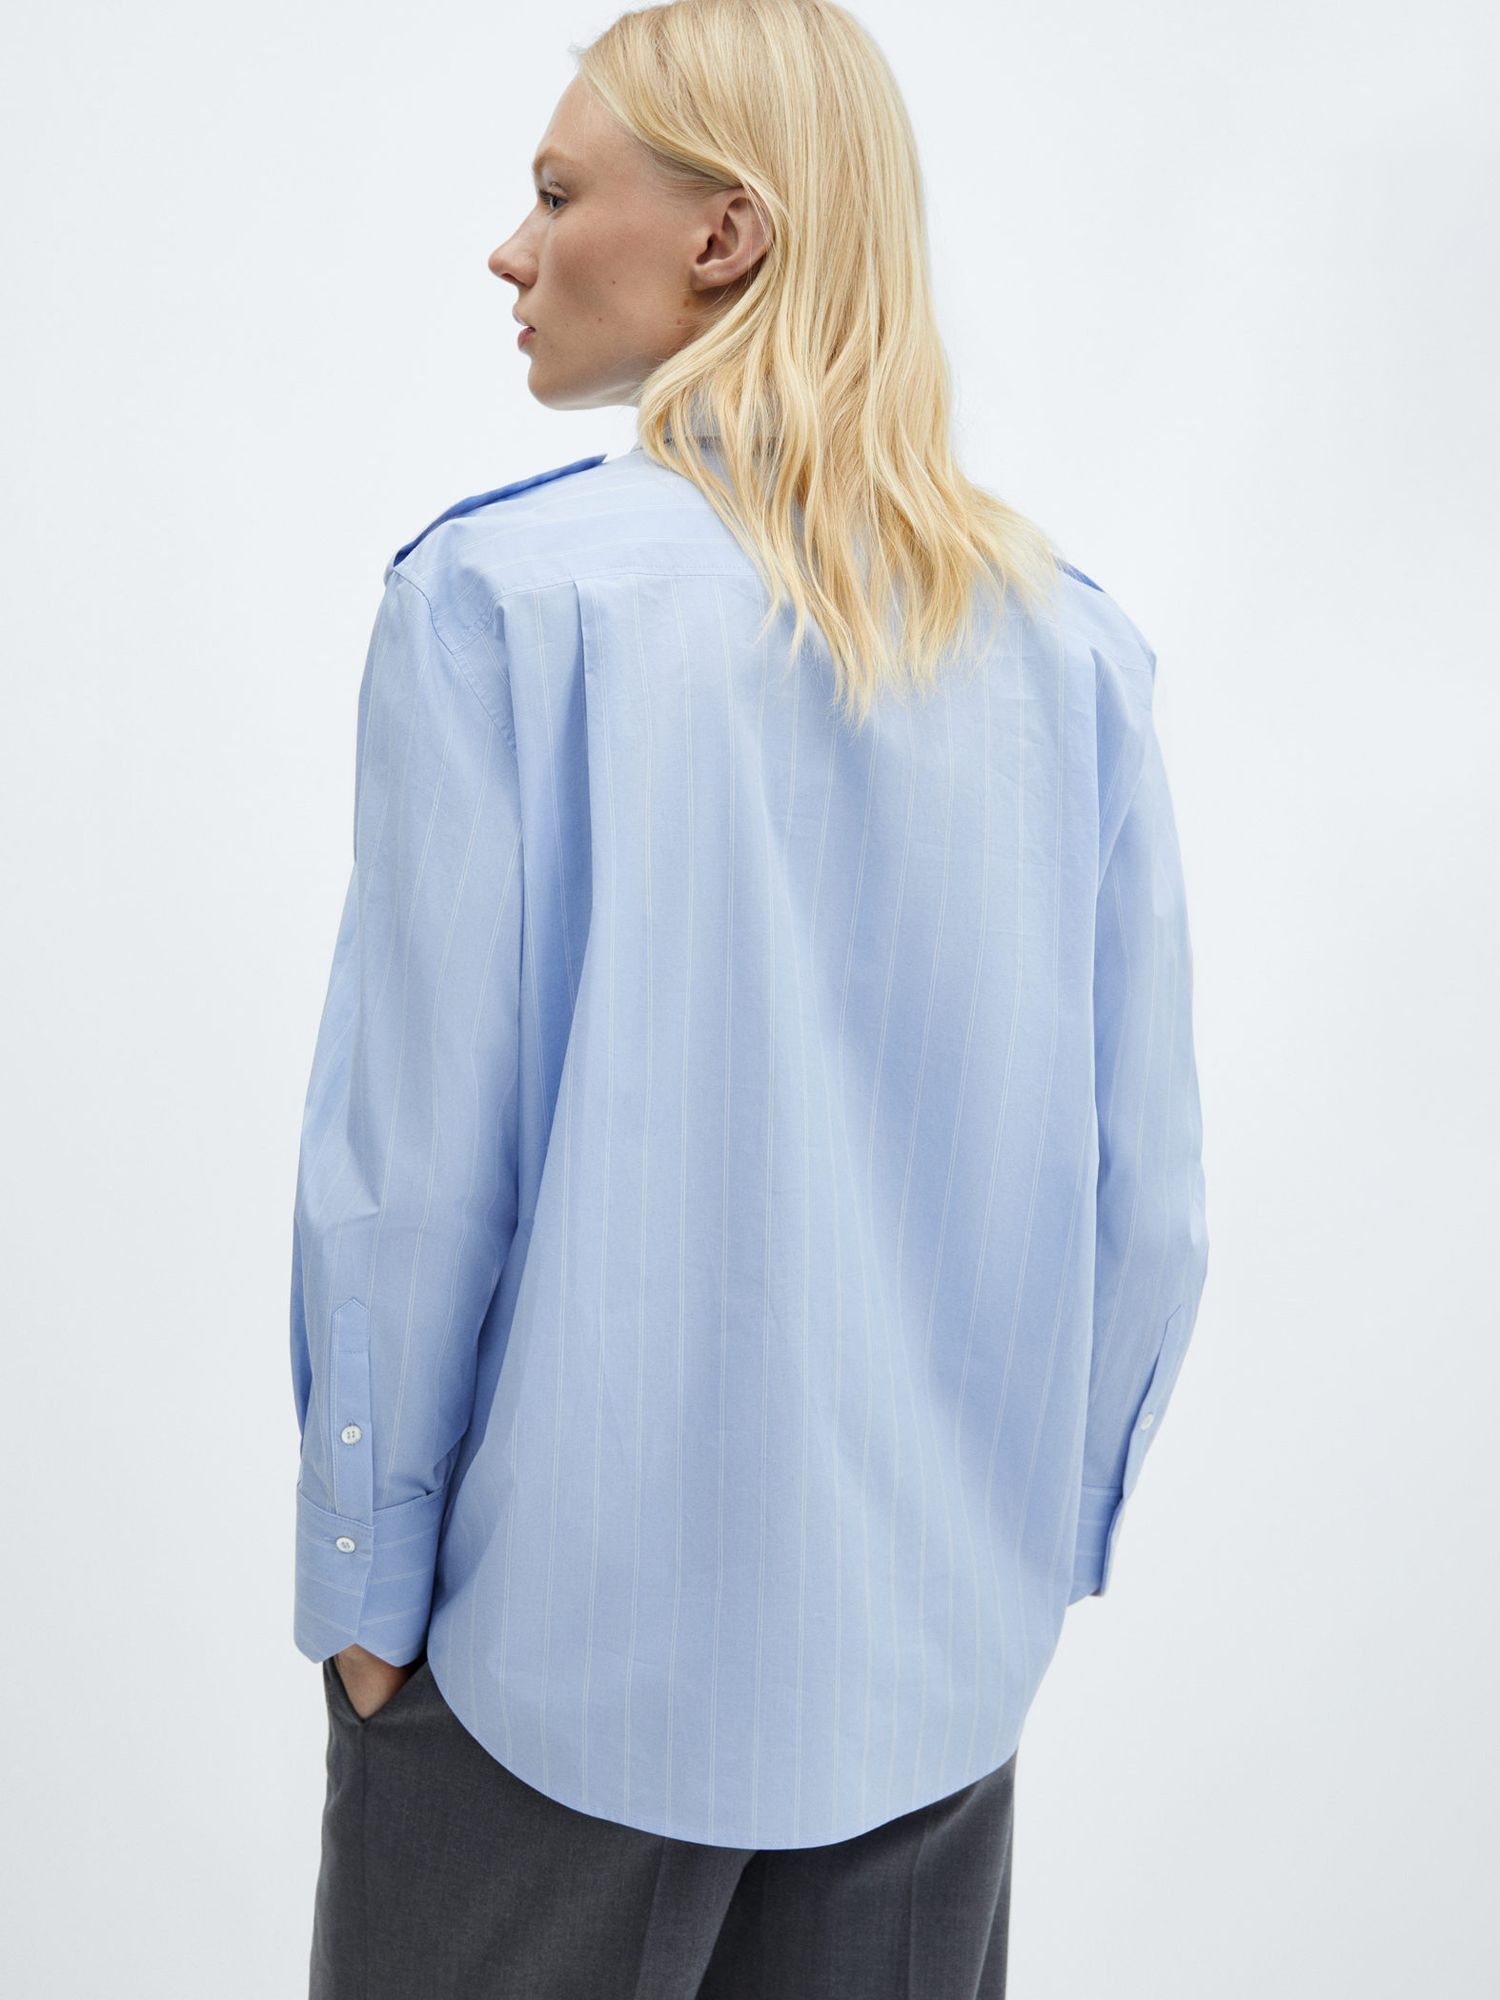 Buy Mango Mateos Striped Cotton Shirt, Blue Online at johnlewis.com